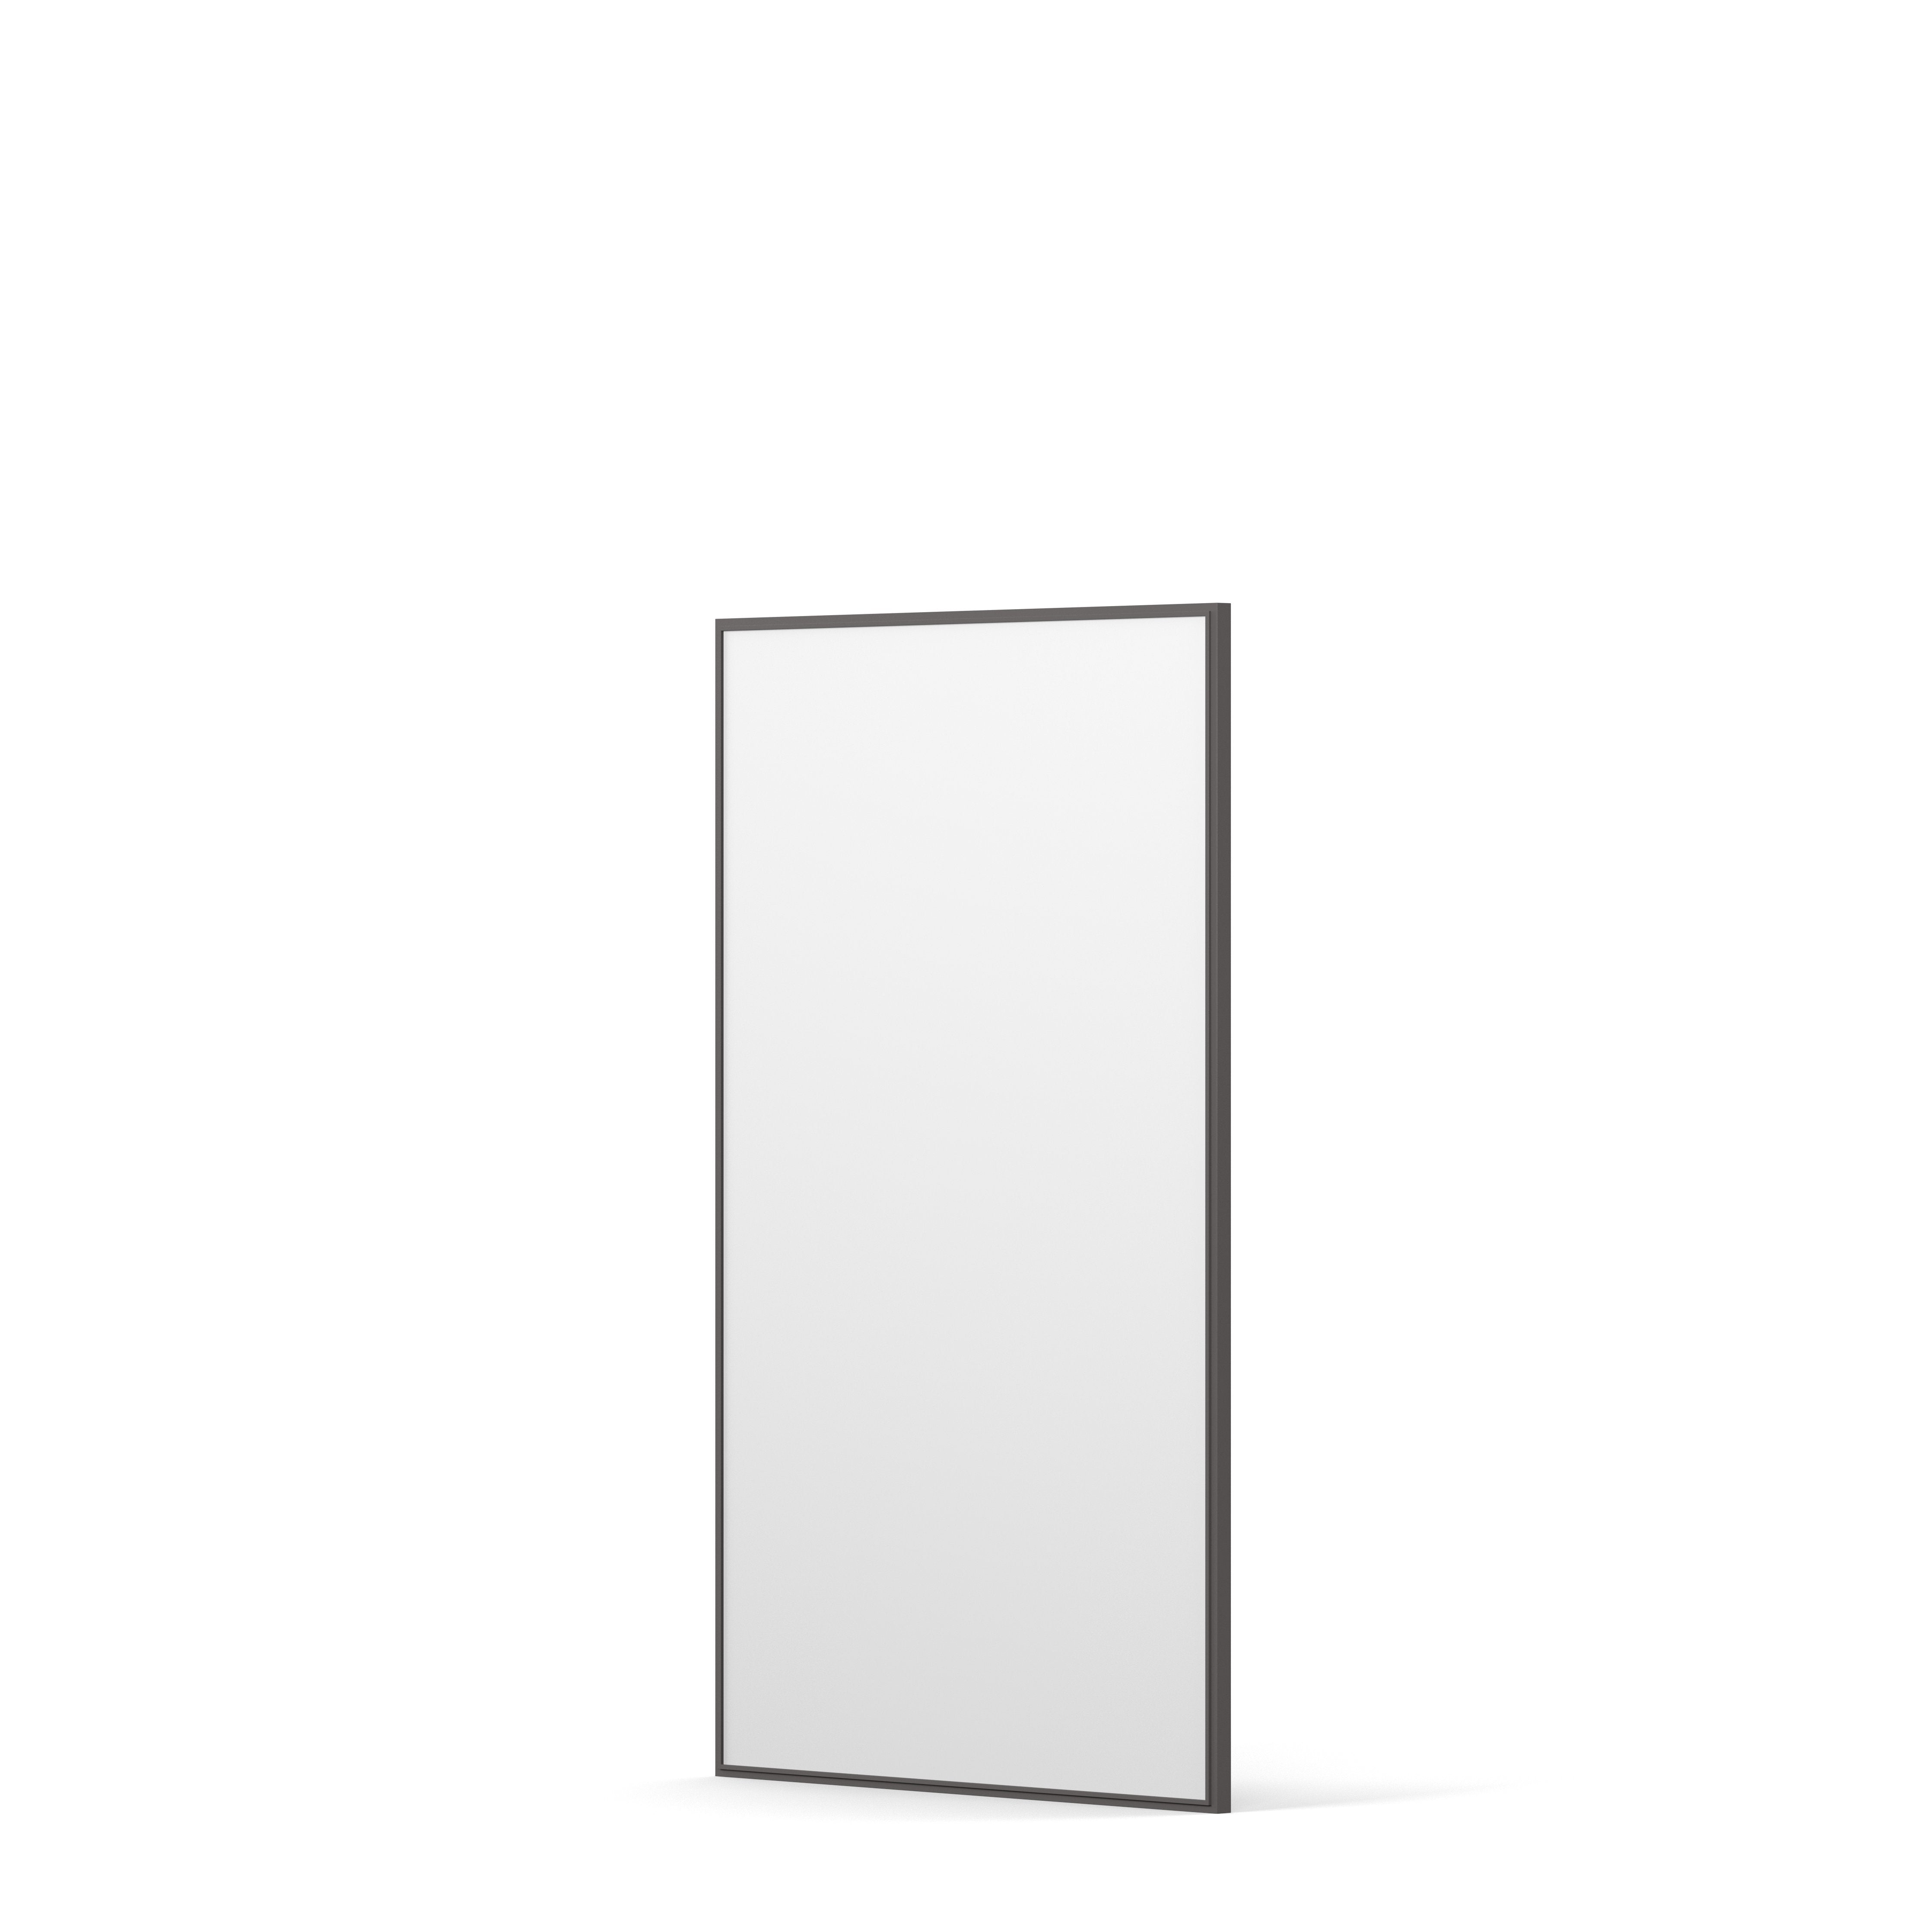 Englesson Cube Spegel Rektangulär #färg_Edge Grey #Colour_Edge Grey